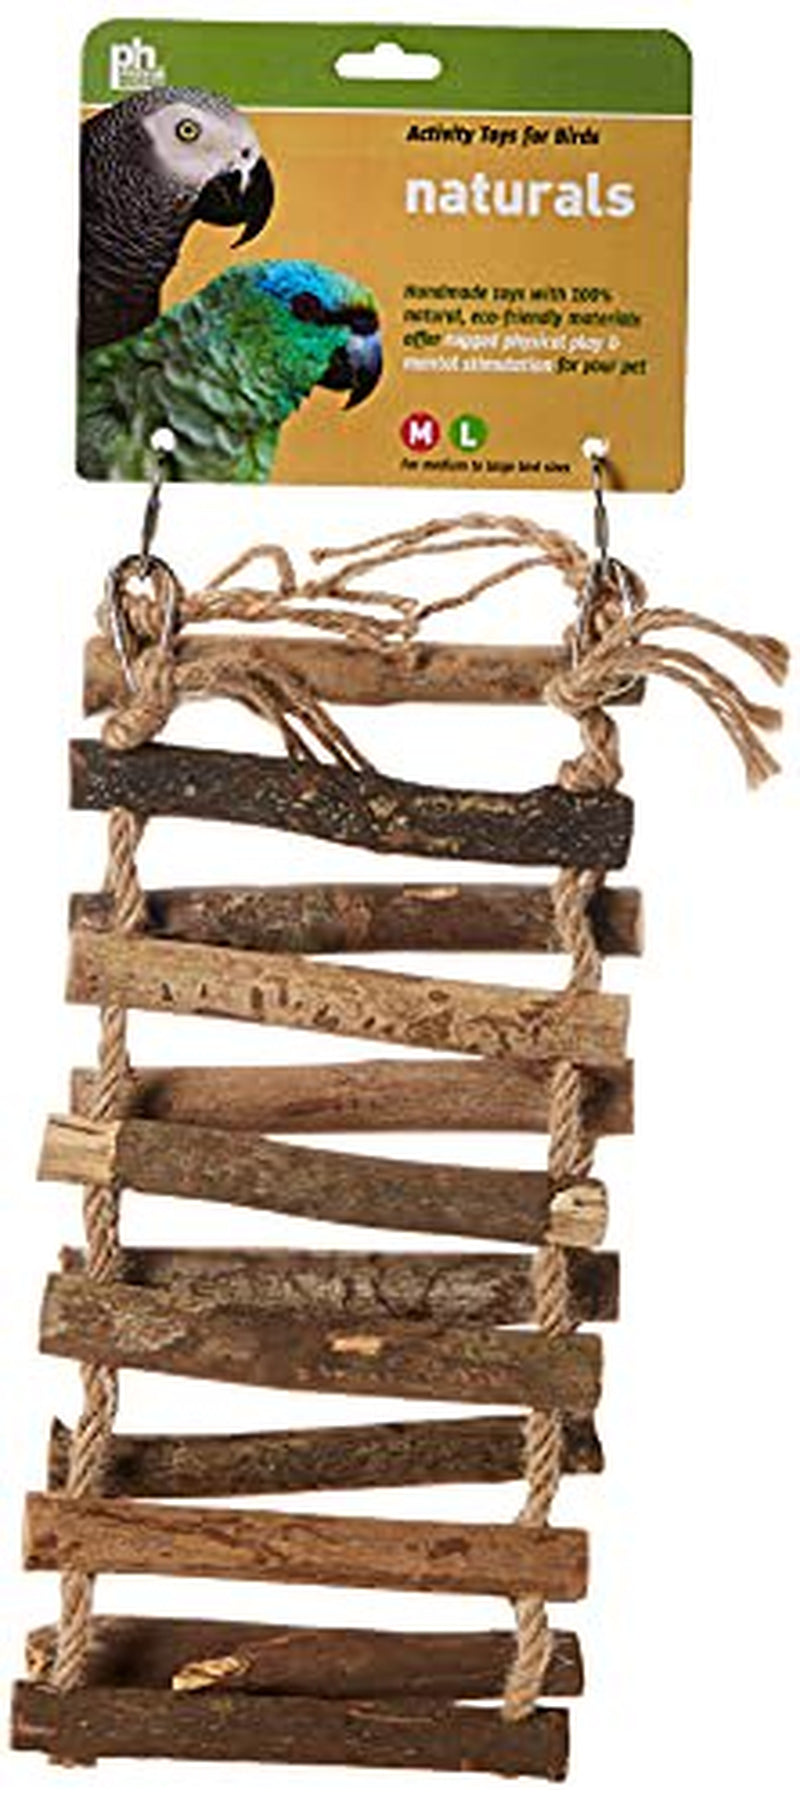 Prevue Hendryx 62807 Naturals Rope Ladder Bird Toy, Large